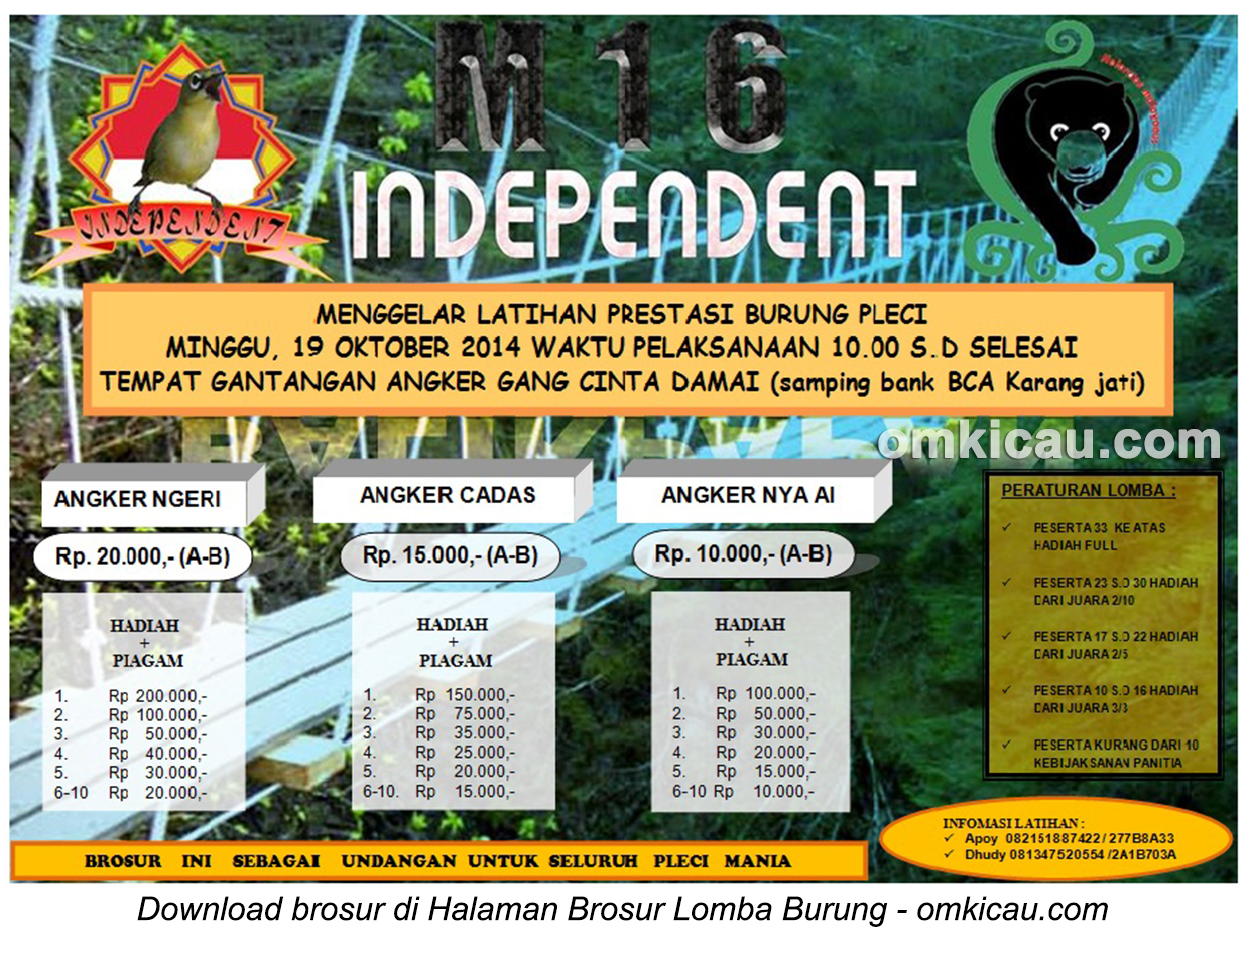 Brosur Latpres Burung Pleci M16 Independent, Balikpapan, 19 Oktober 2014